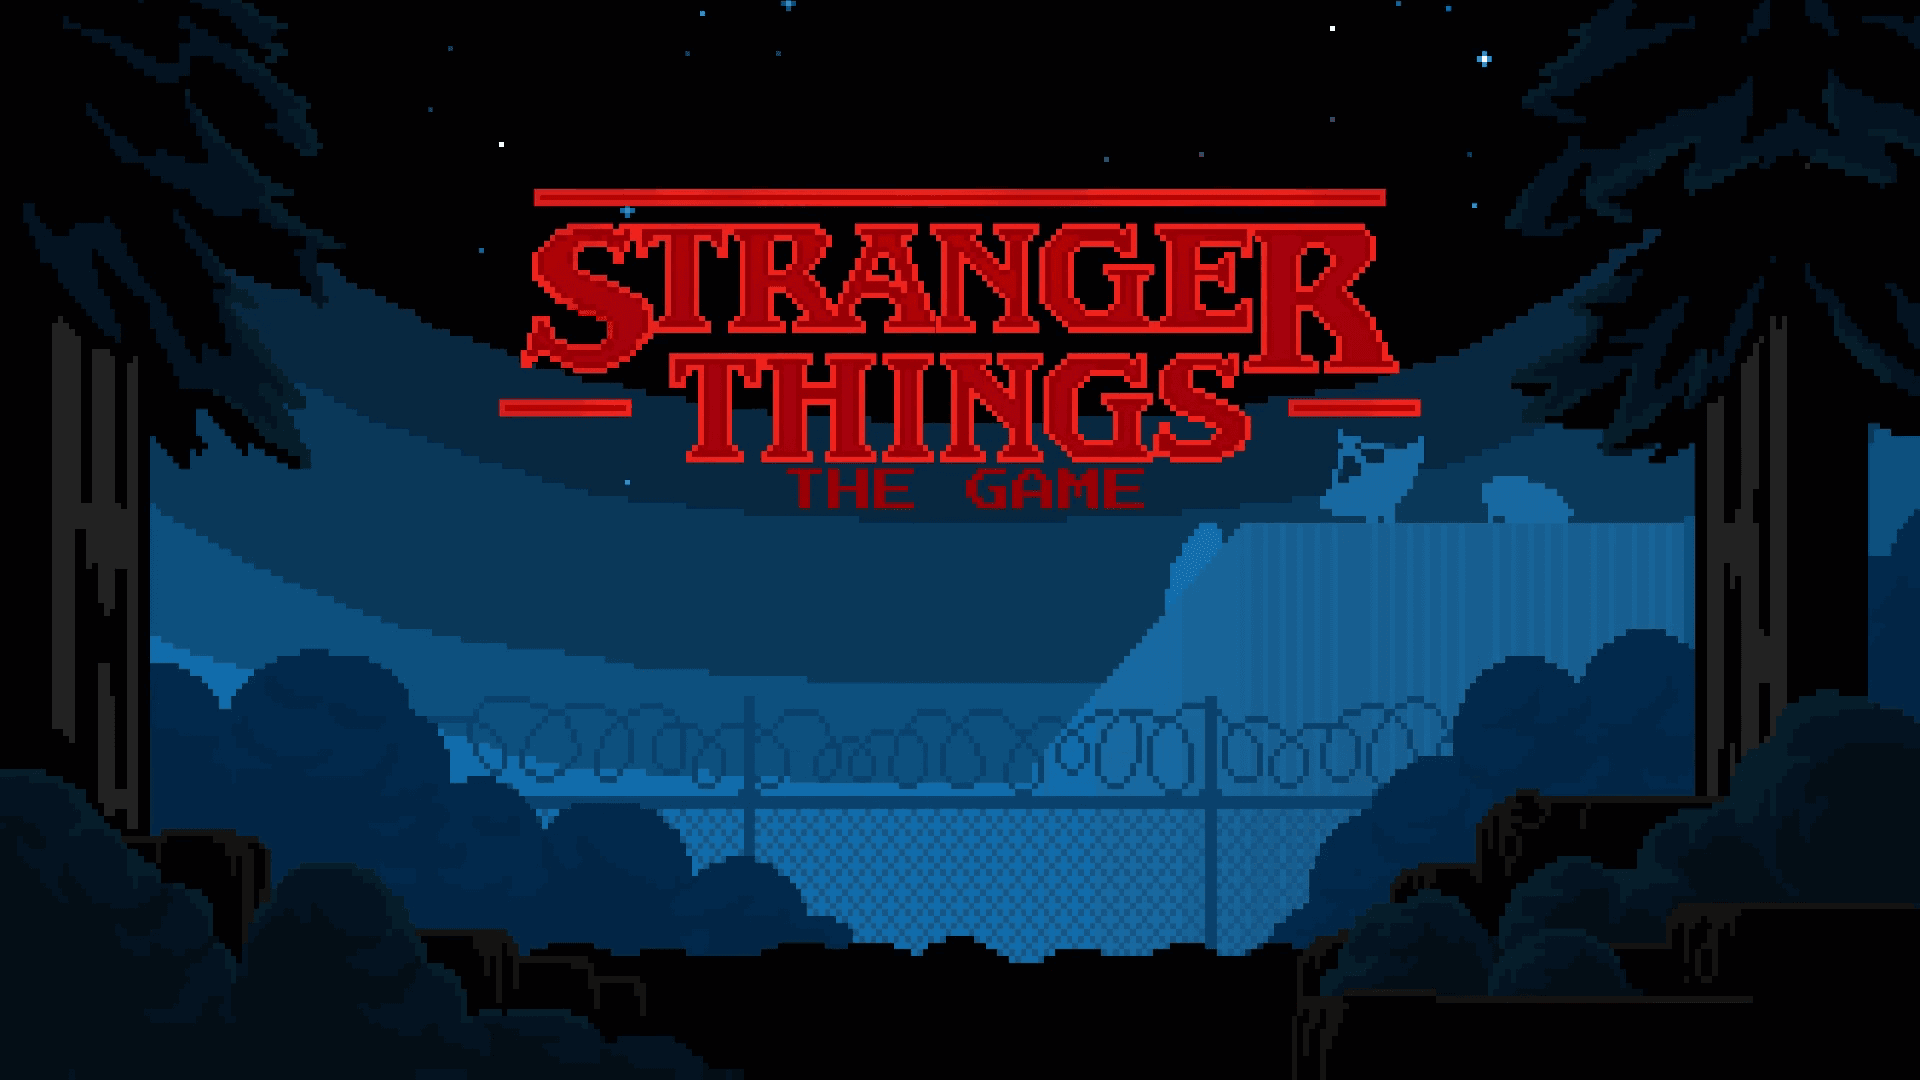 Stranger Things 3 The Nintendo Switch Version Free Game Full Download 2019